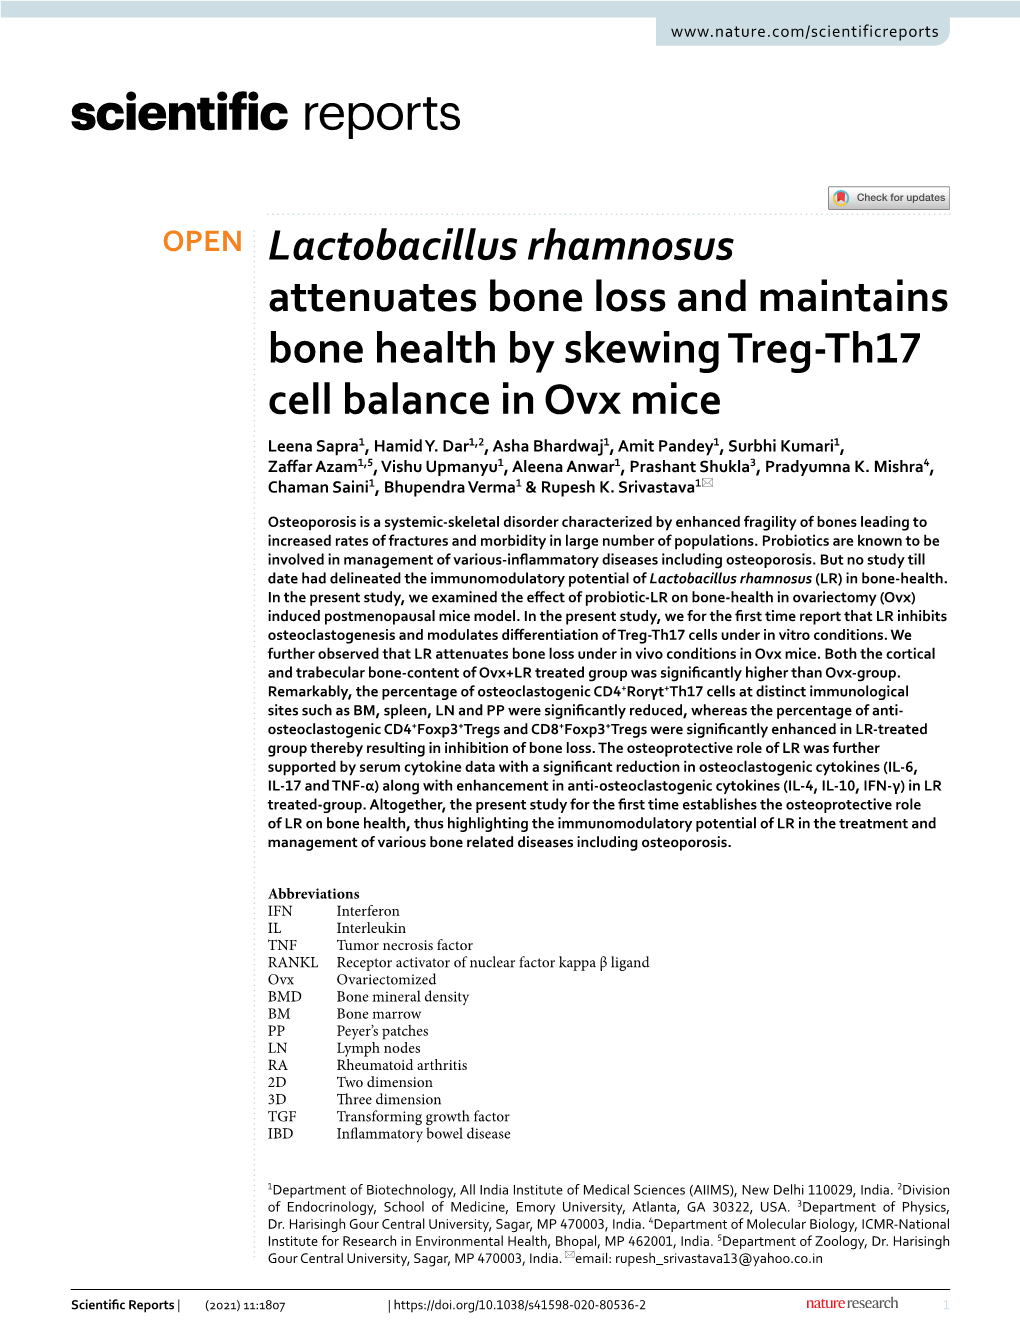 Lactobacillus Rhamnosus Attenuates Bone Loss and Maintains Bone Health by Skewing Treg‑Th17 Cell Balance in Ovx Mice Leena Sapra1, Hamid Y